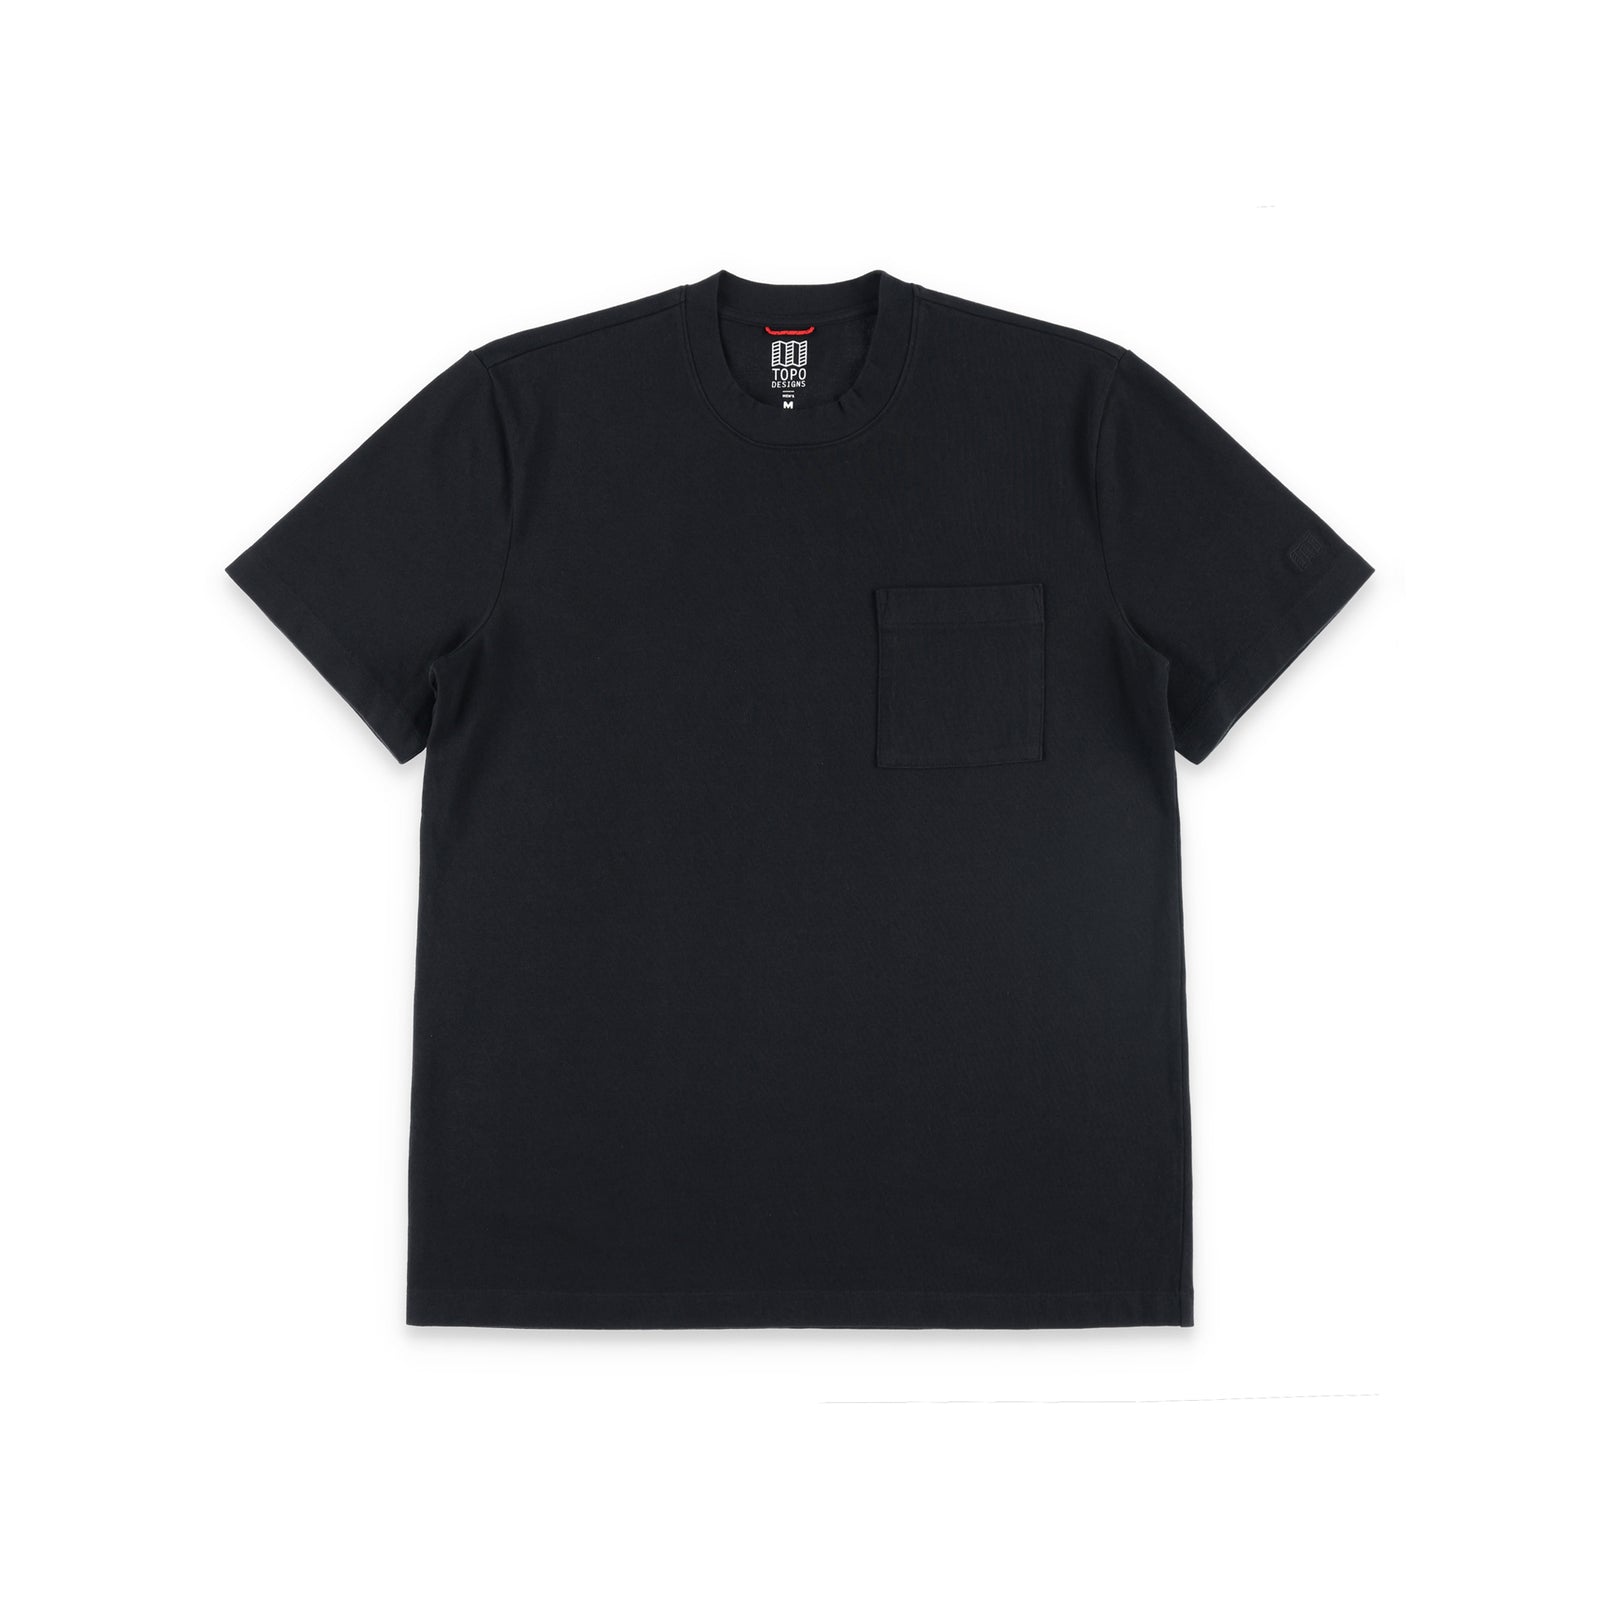 Topo Designs Men's Dirt Pocket Tee 100% organic cotton short sleeve t-shirt in "black"